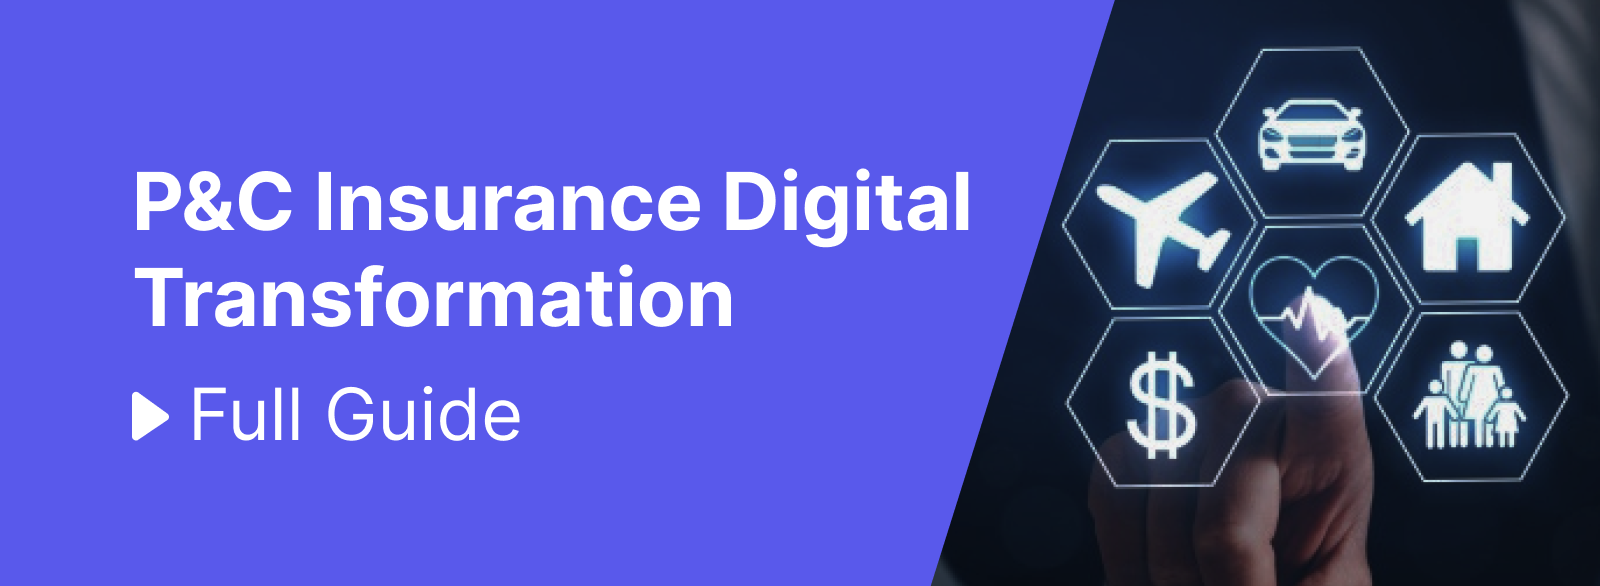 P&C Insurance Digital Transformation